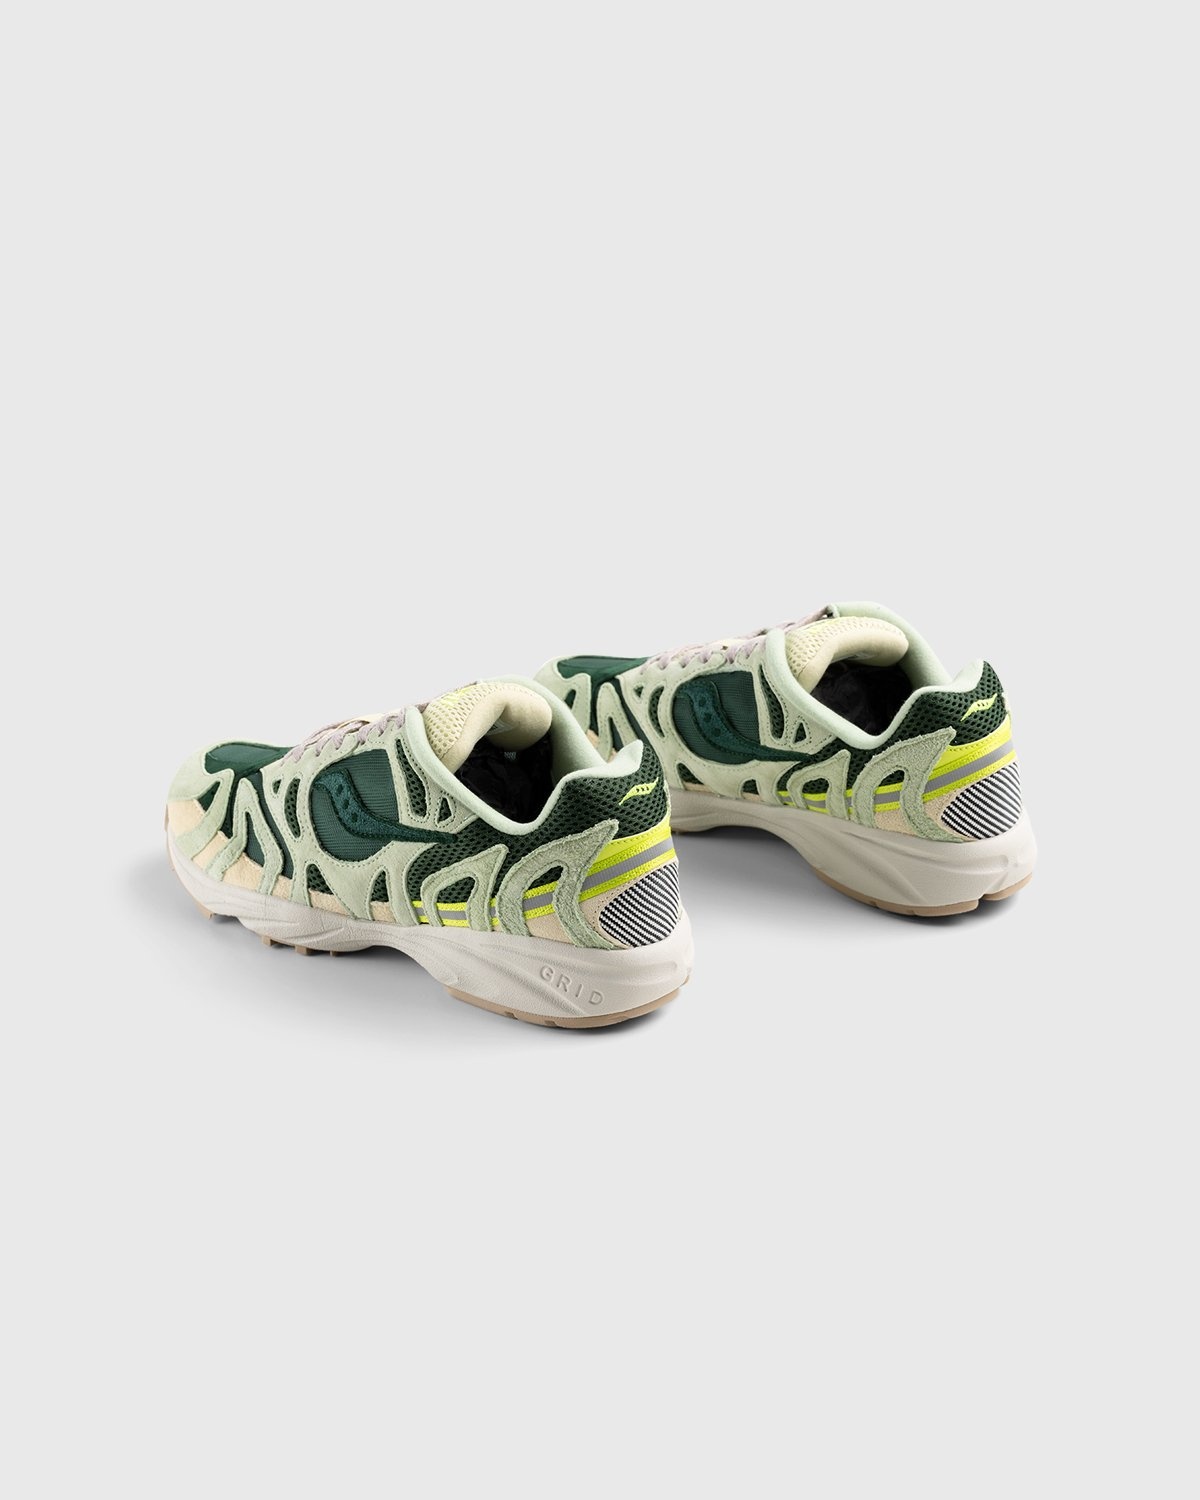 Saucony – Grid Azura 2000 Green - Sneakers - Green - Image 3